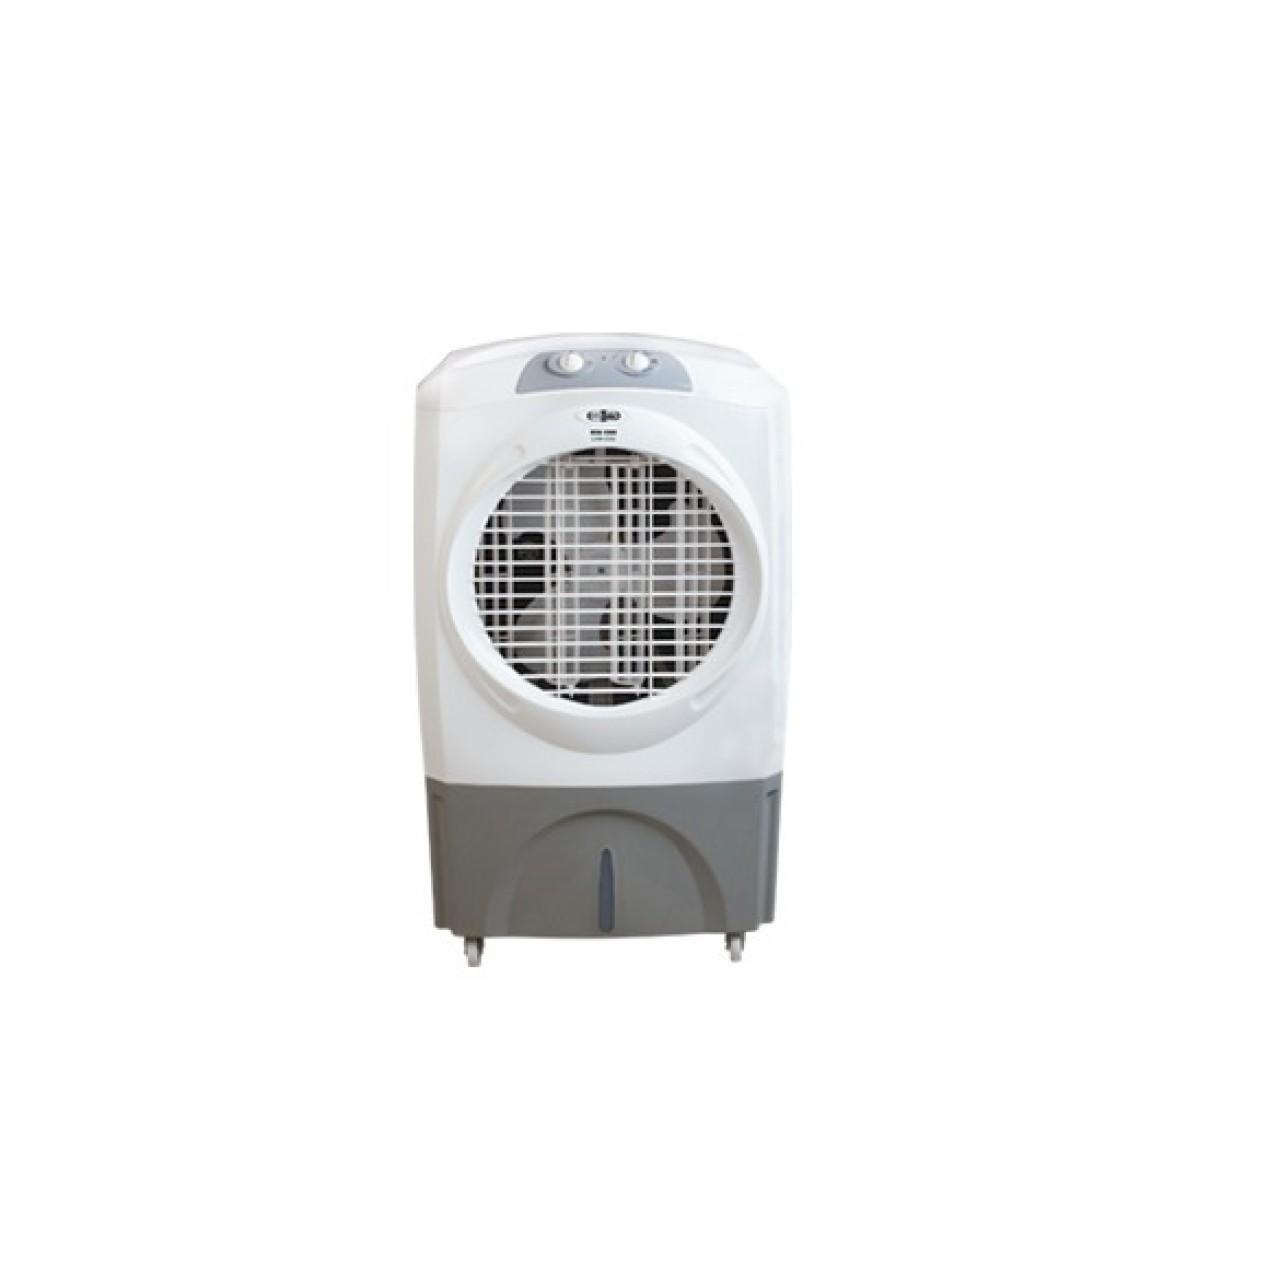 Super Asia Room Air Cooler ECM 4500 – Inverter Air Cooler - 60 Liters Capacity